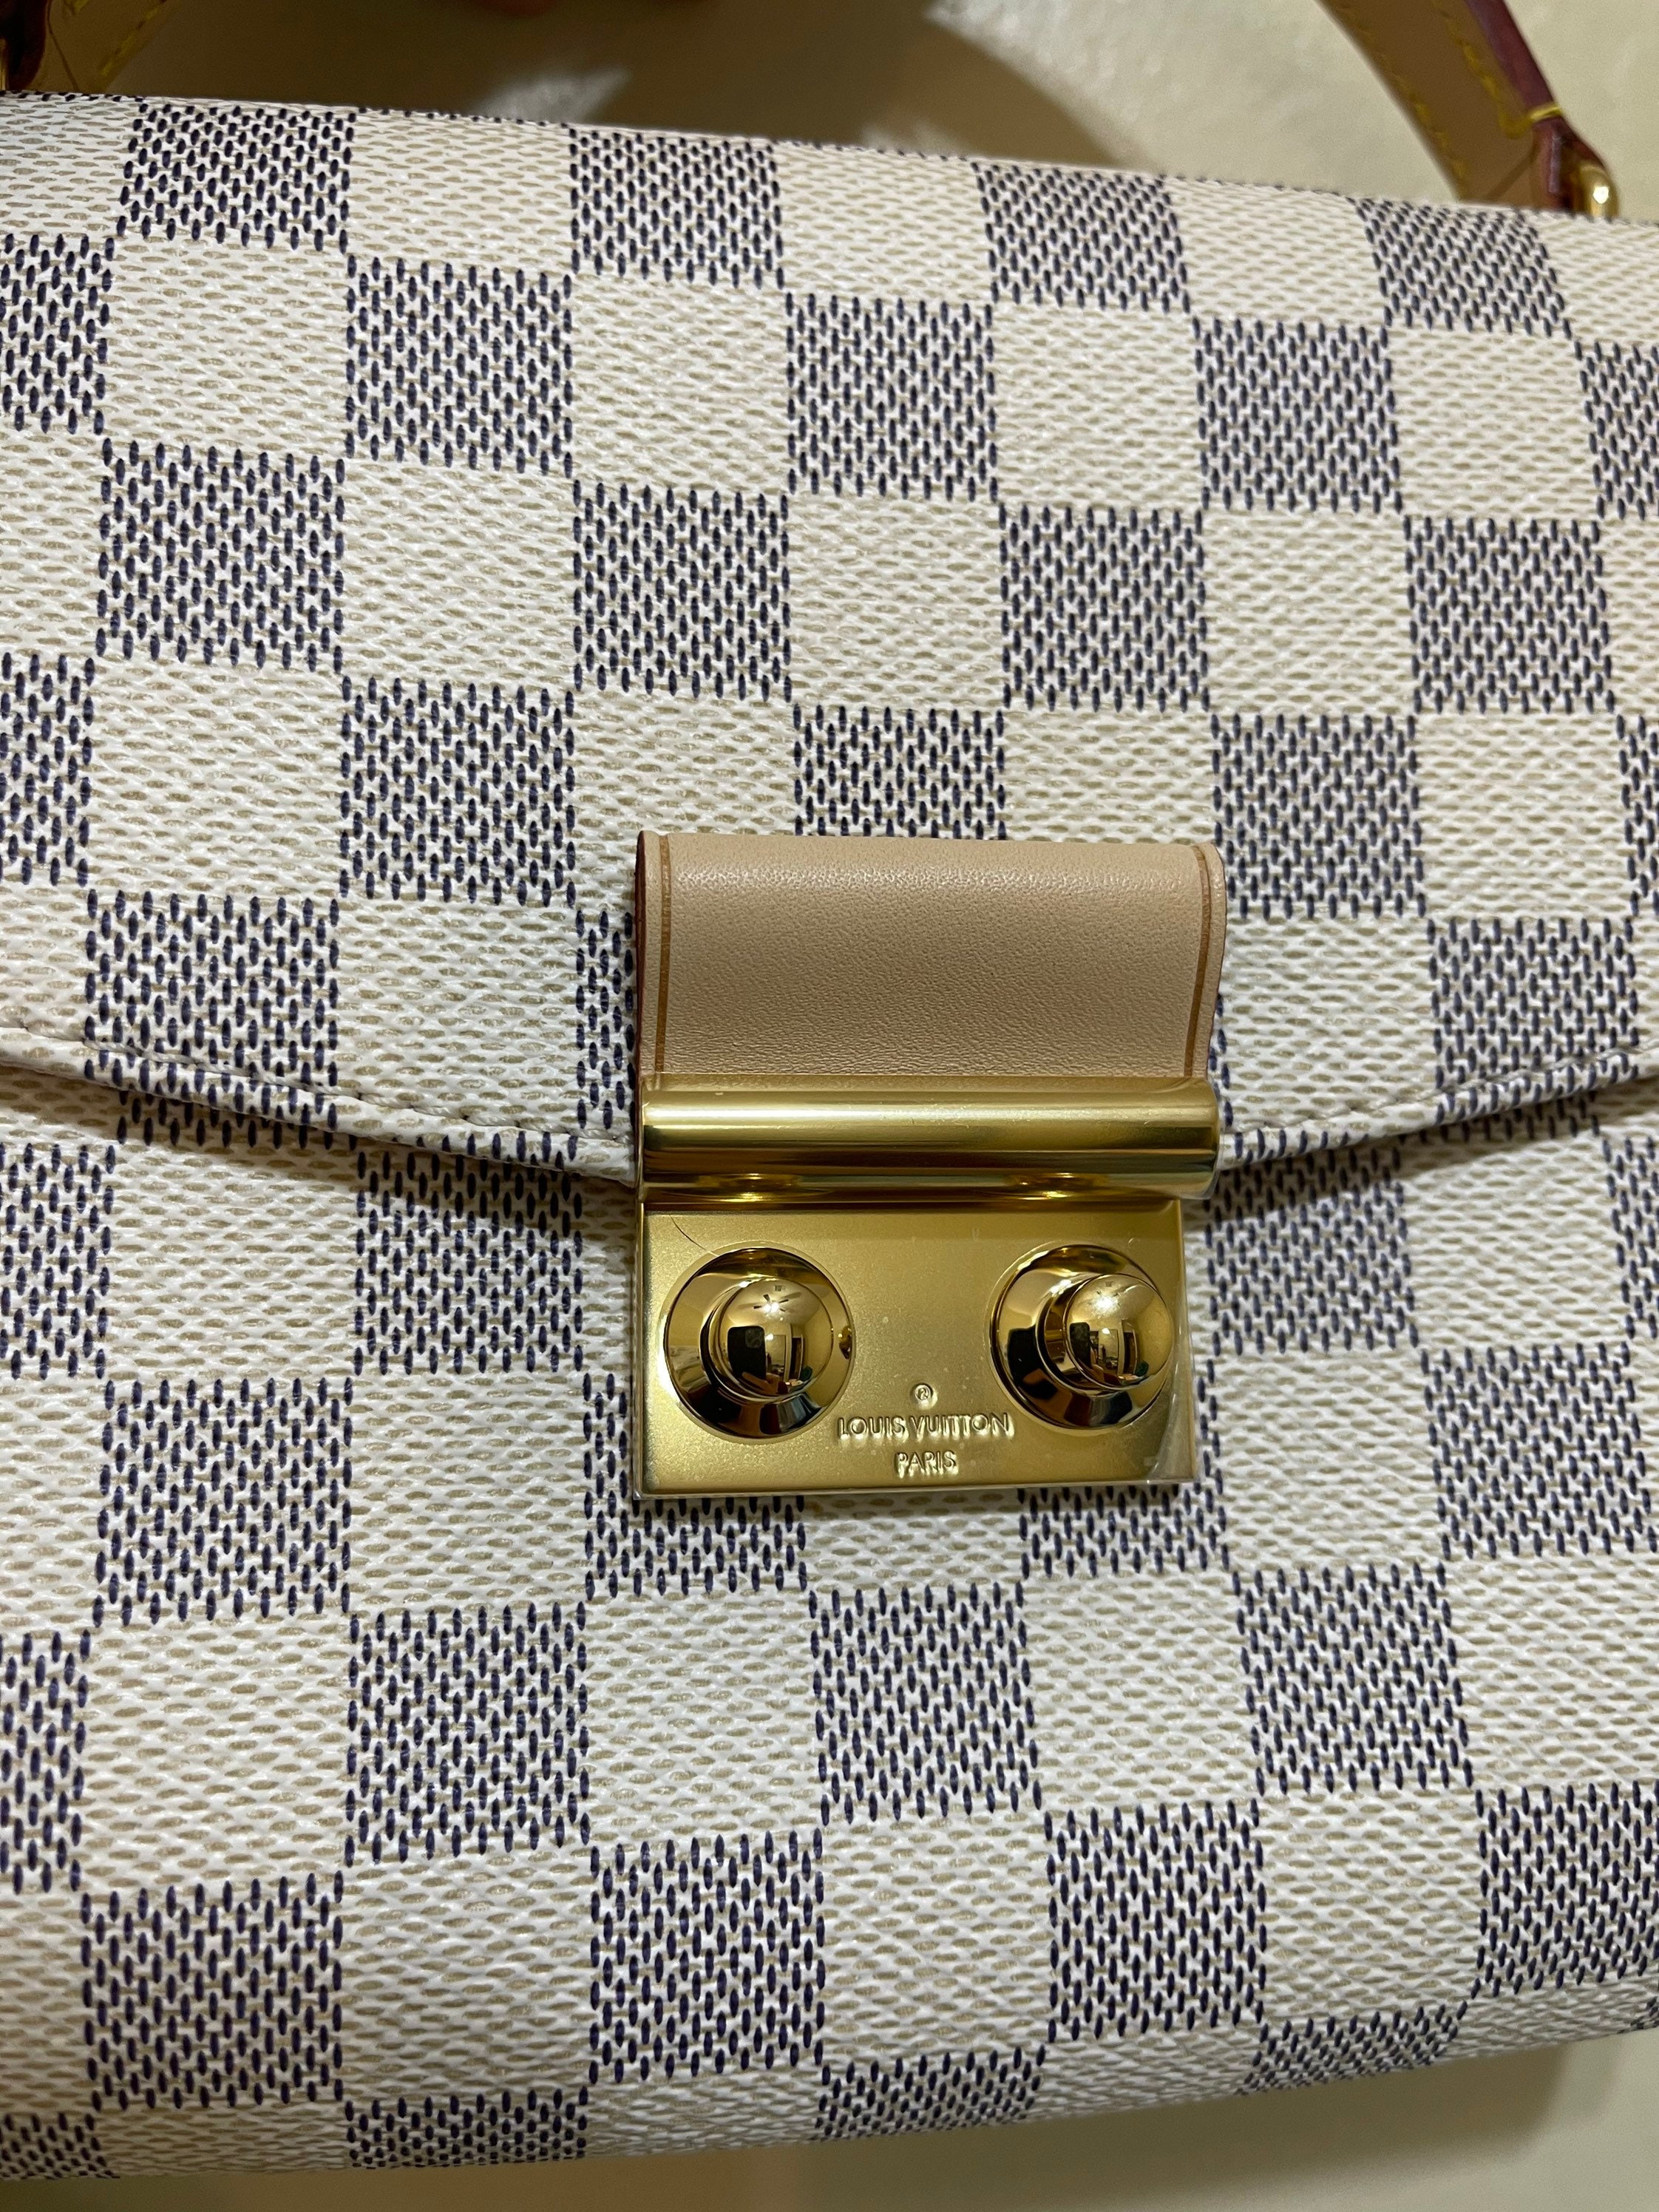 Louis Vuitton Authentic Damier Azure logo canvas Zippy mini crossbody bag  gold Multiple - $240 (81% Off Retail) - From Liv